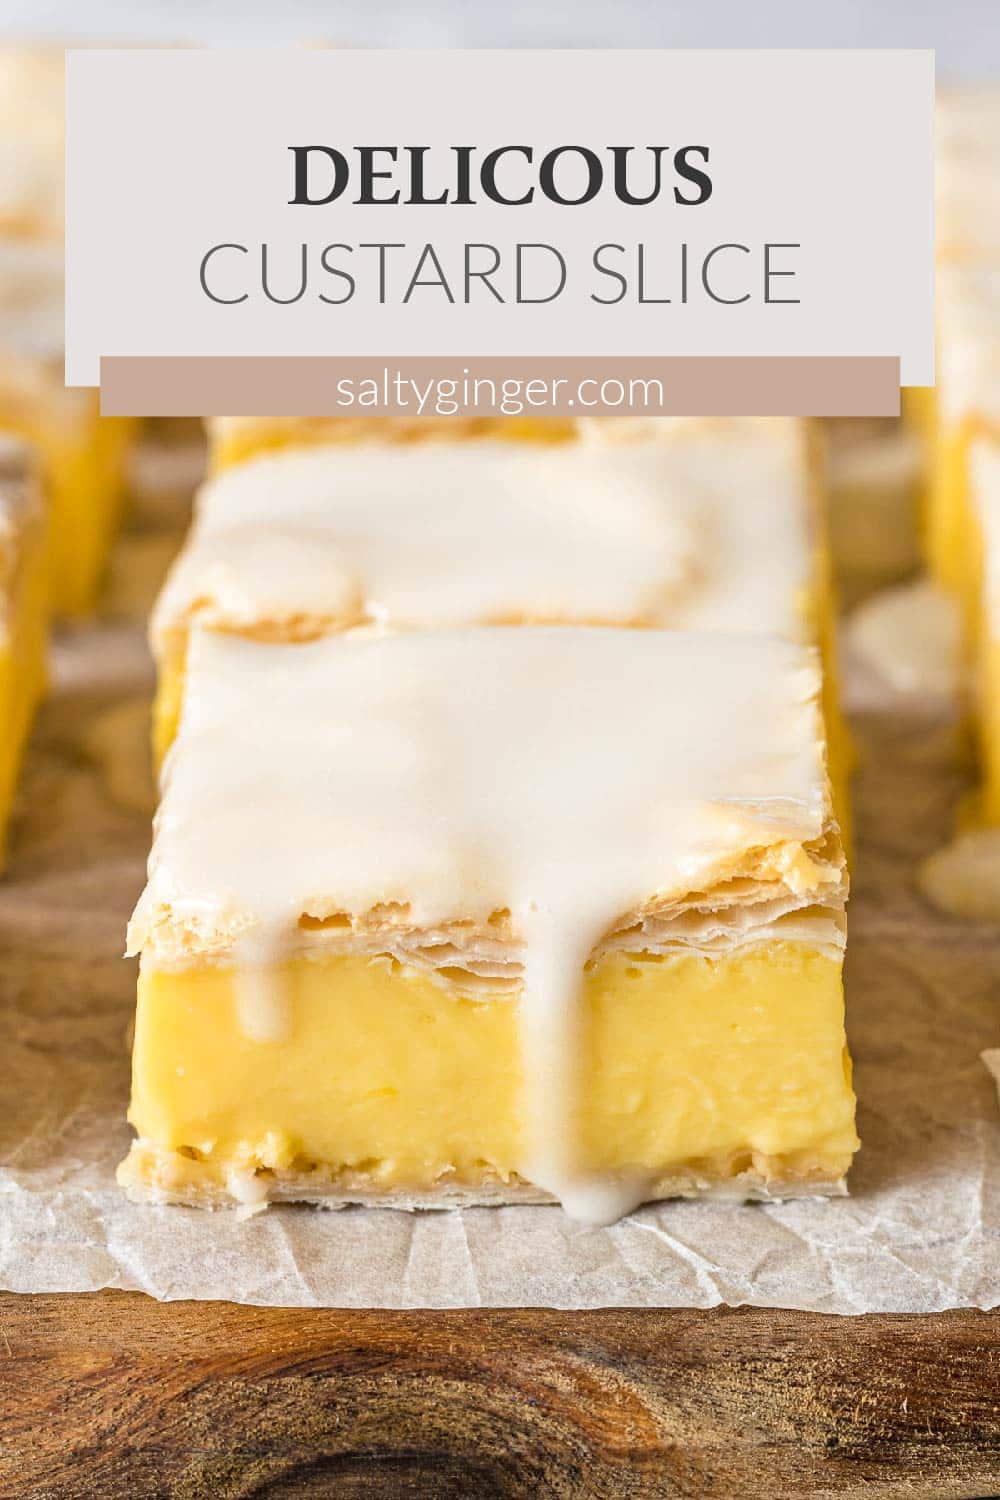 Vanilla custard slice topped with an icing glaze.